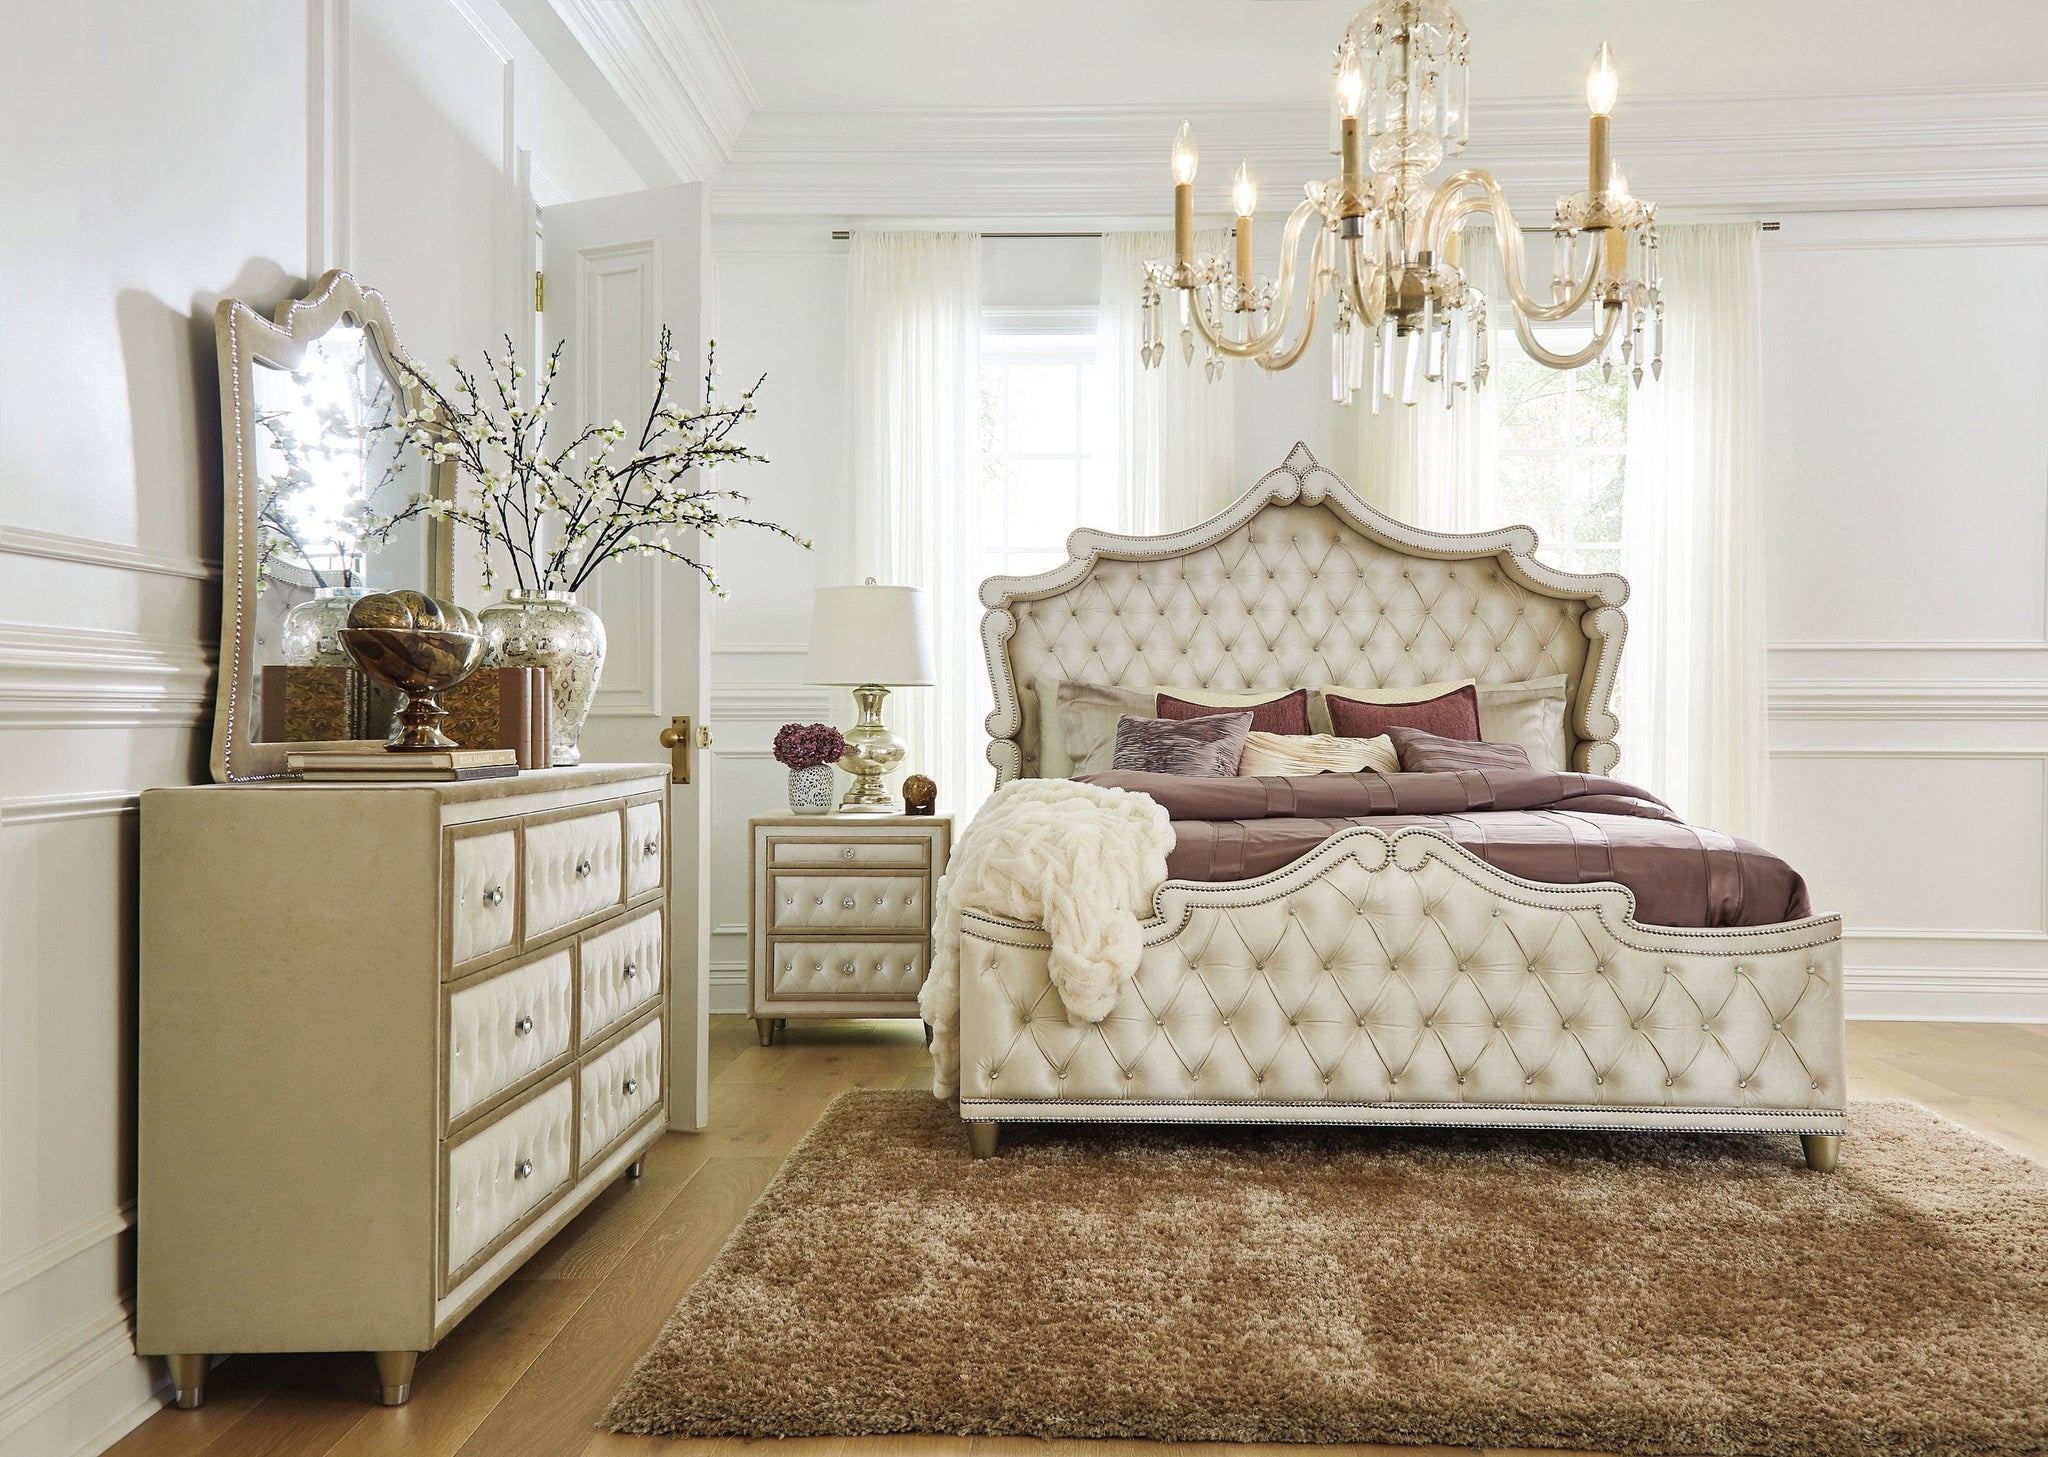 Antonella Upholstered Tufted Bed Ivory And Camel SKU: 223521Q